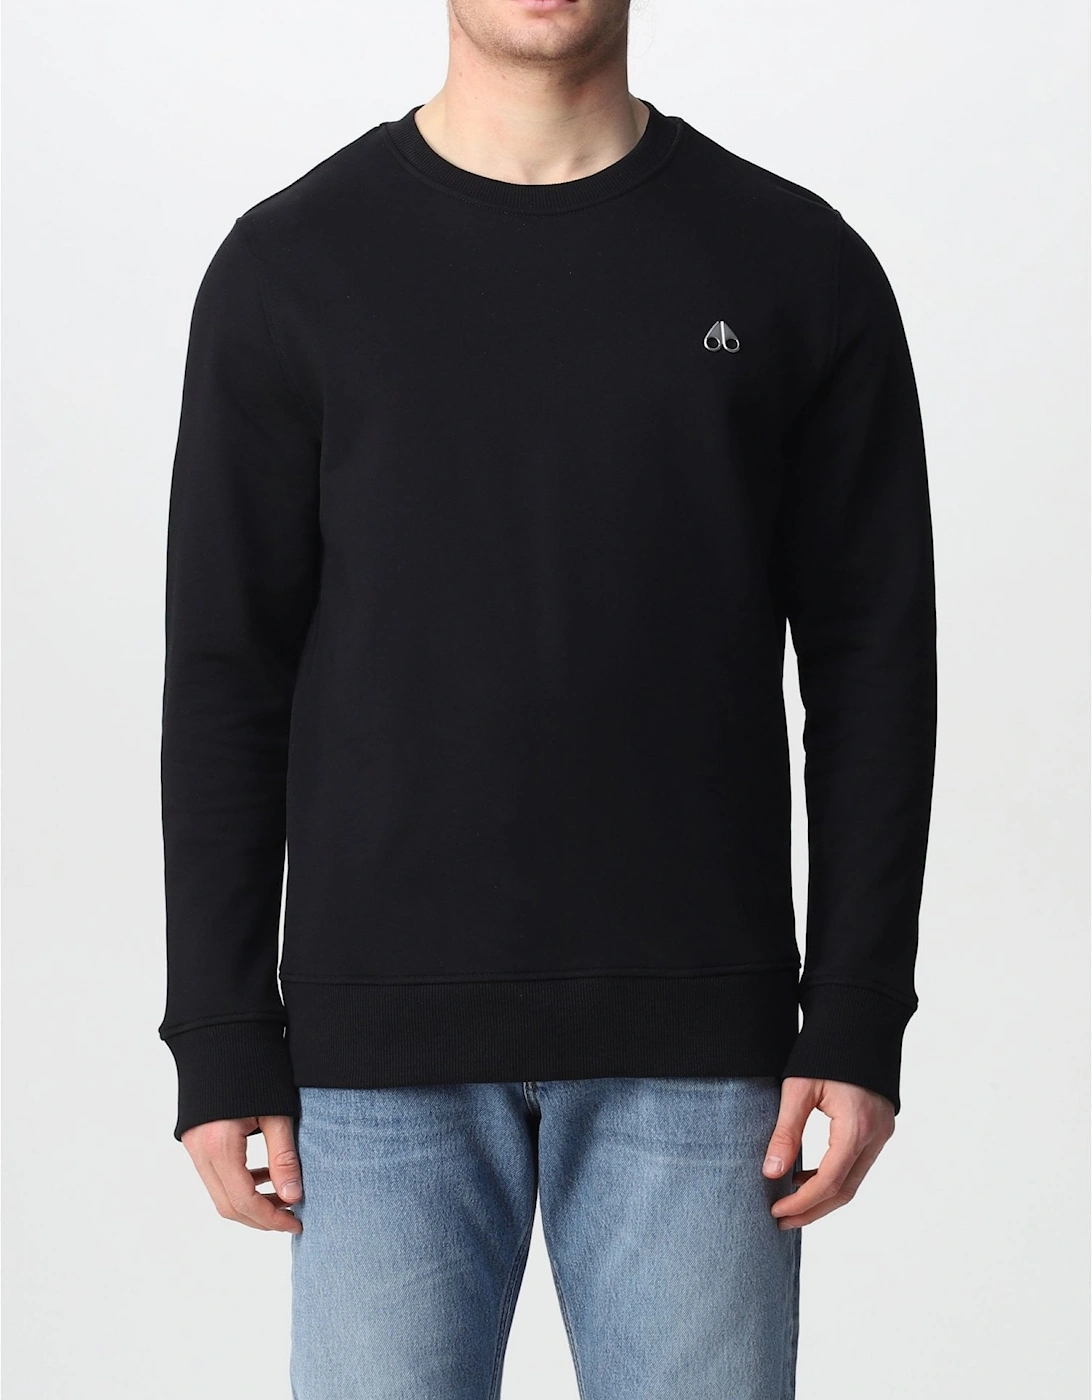 Cotton Greyfield Pullover Black Sweatshirt